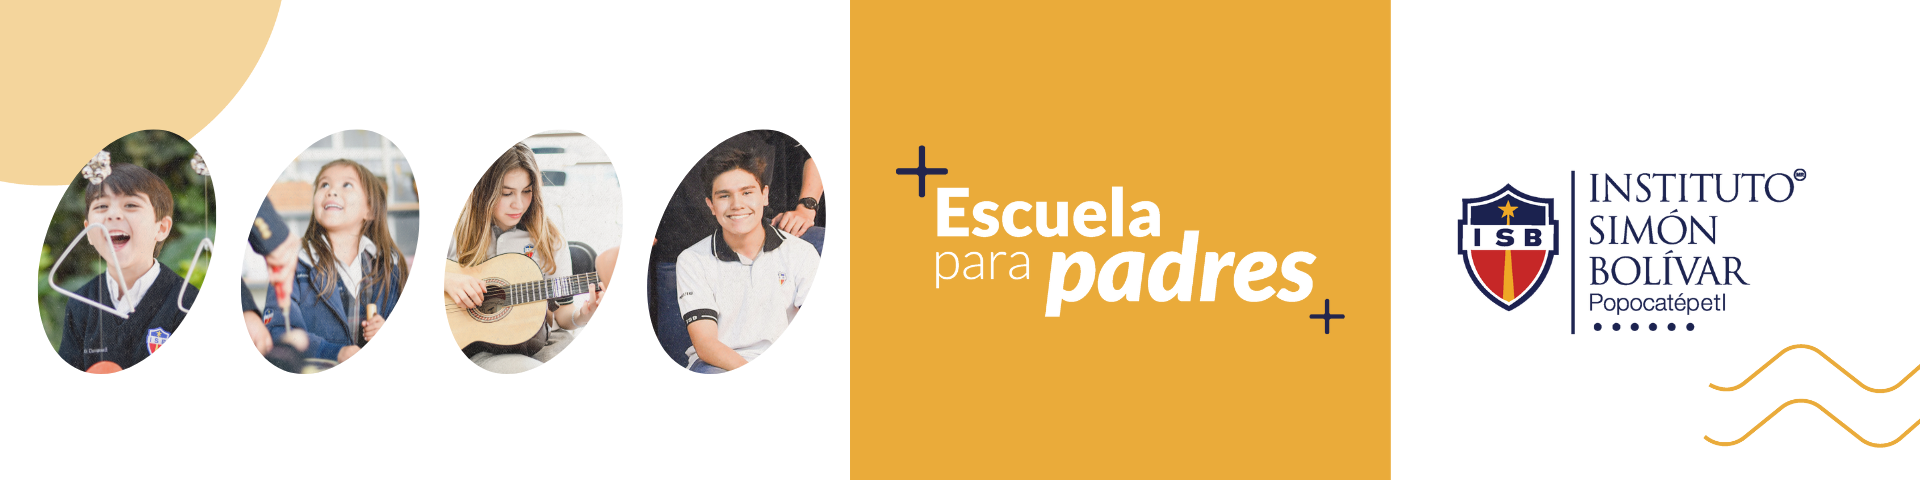 Escuela para Padres | Instituto Simón Bolívar | Kínder | Preescolar | Maternal | Primaria | Secundaria | Preparatoria | Prepa | Bachillerato | Instituto Simón Bolívar | Inscripciones Abiertas